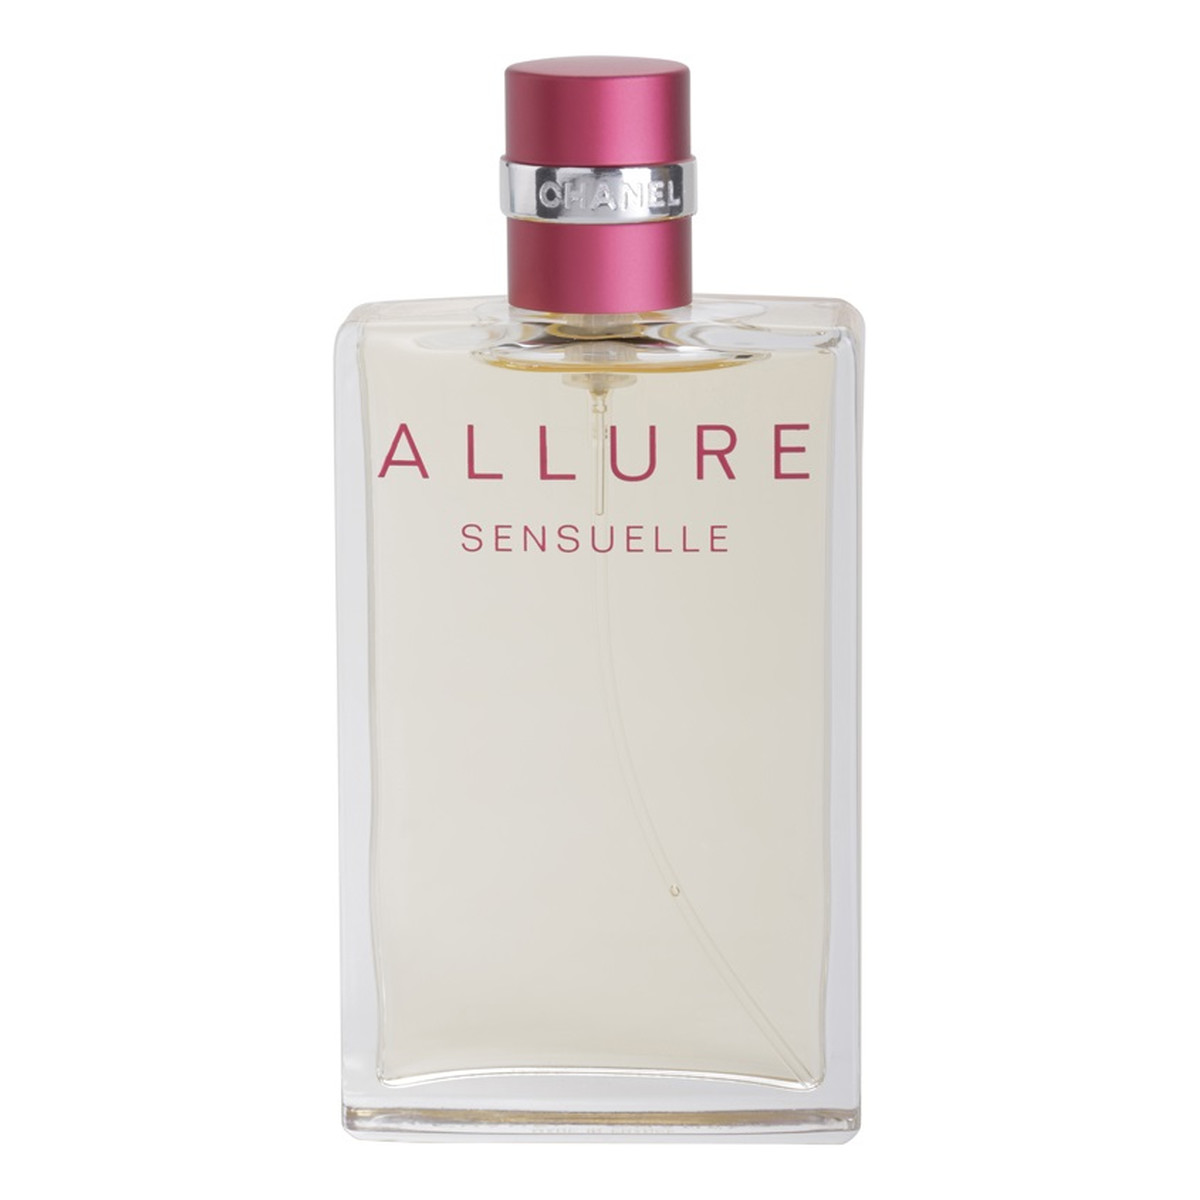 Chanel Allure Sensuelle woda perfumowana dla kobiet 35ml